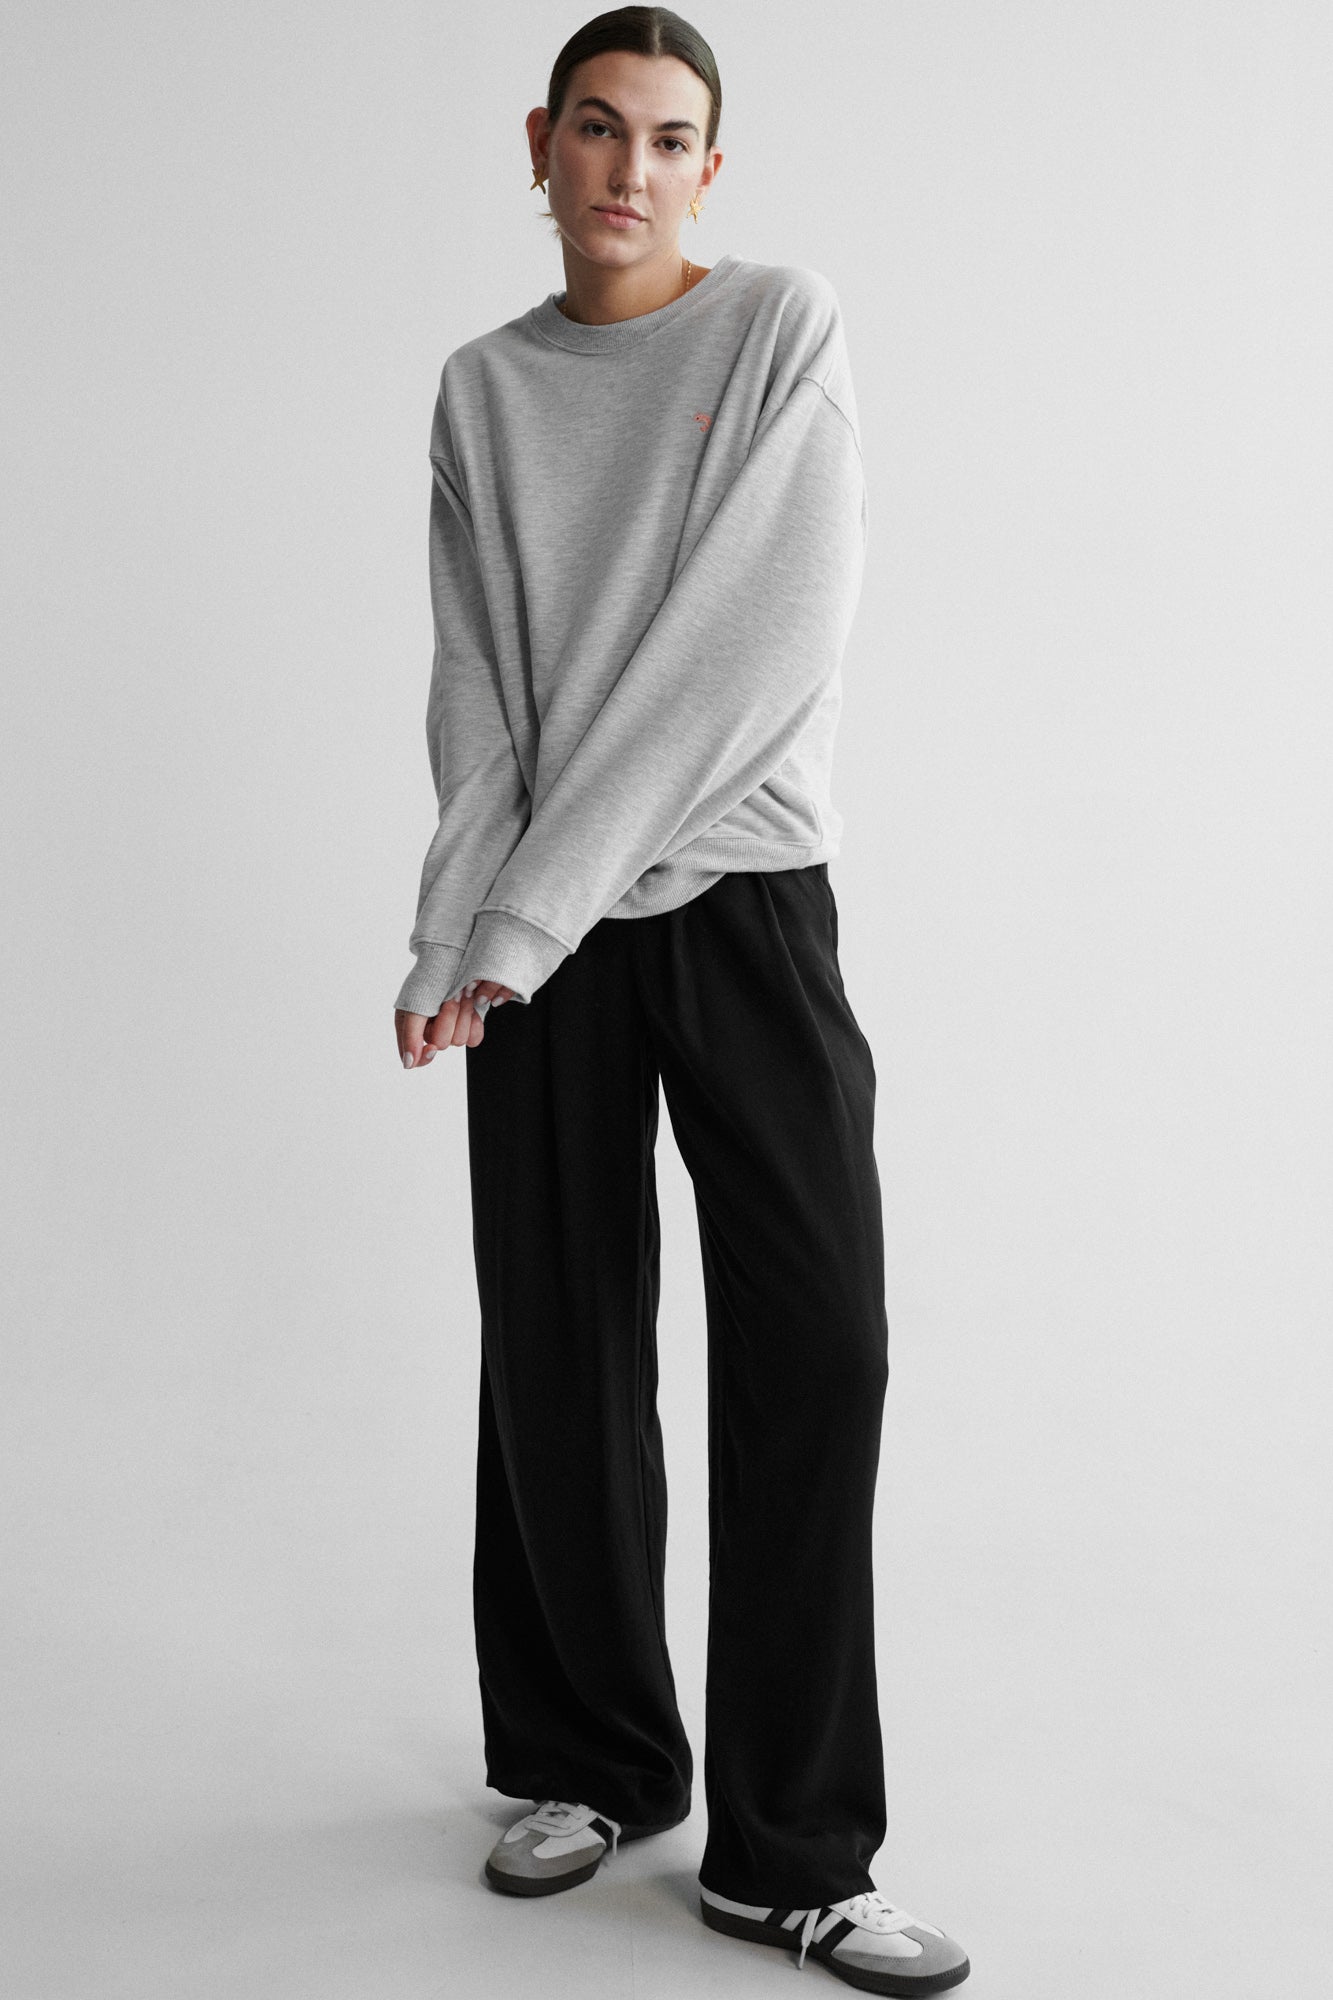 Sweatshirt in cotton / 17 / 16 / mist grey / shrimp